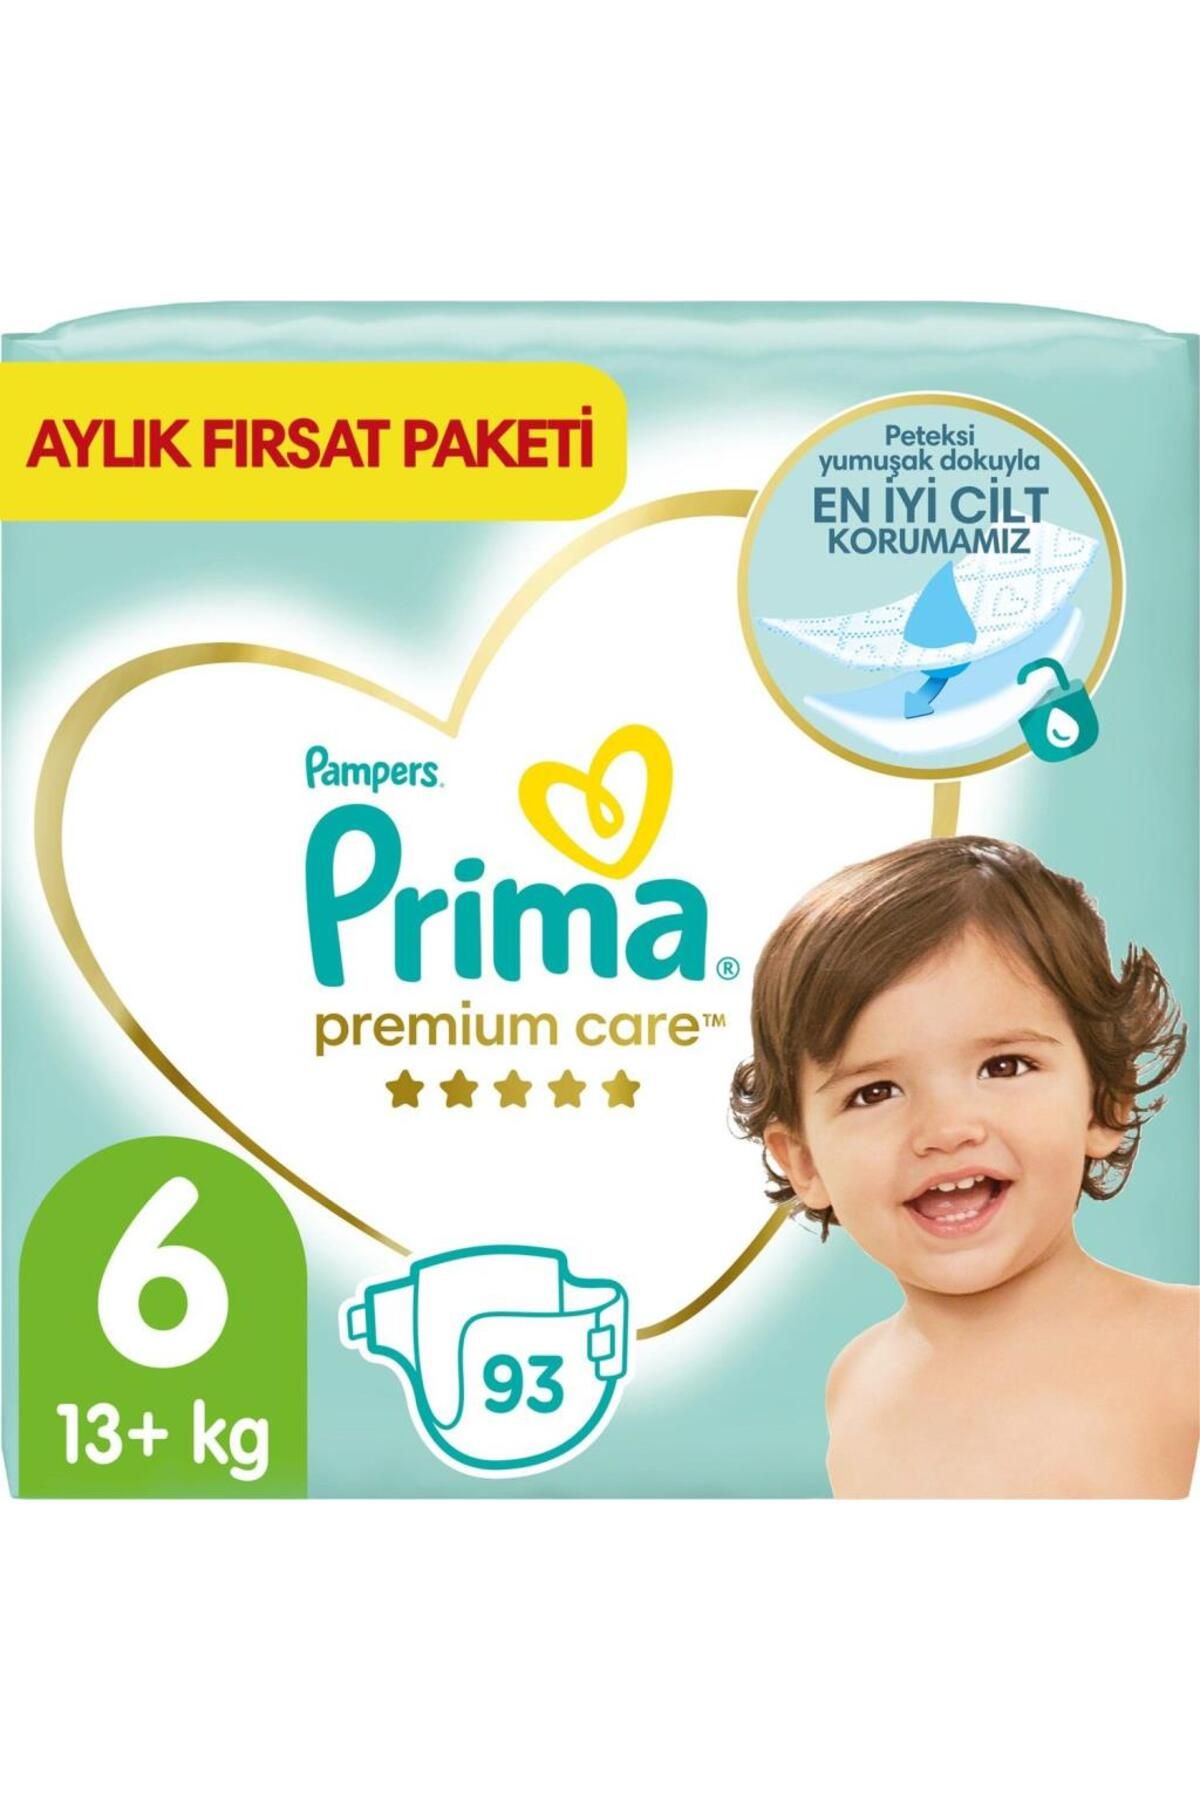 Prima Premium Care Aylık Fırsat Paketi 6 Beden 93 Adet